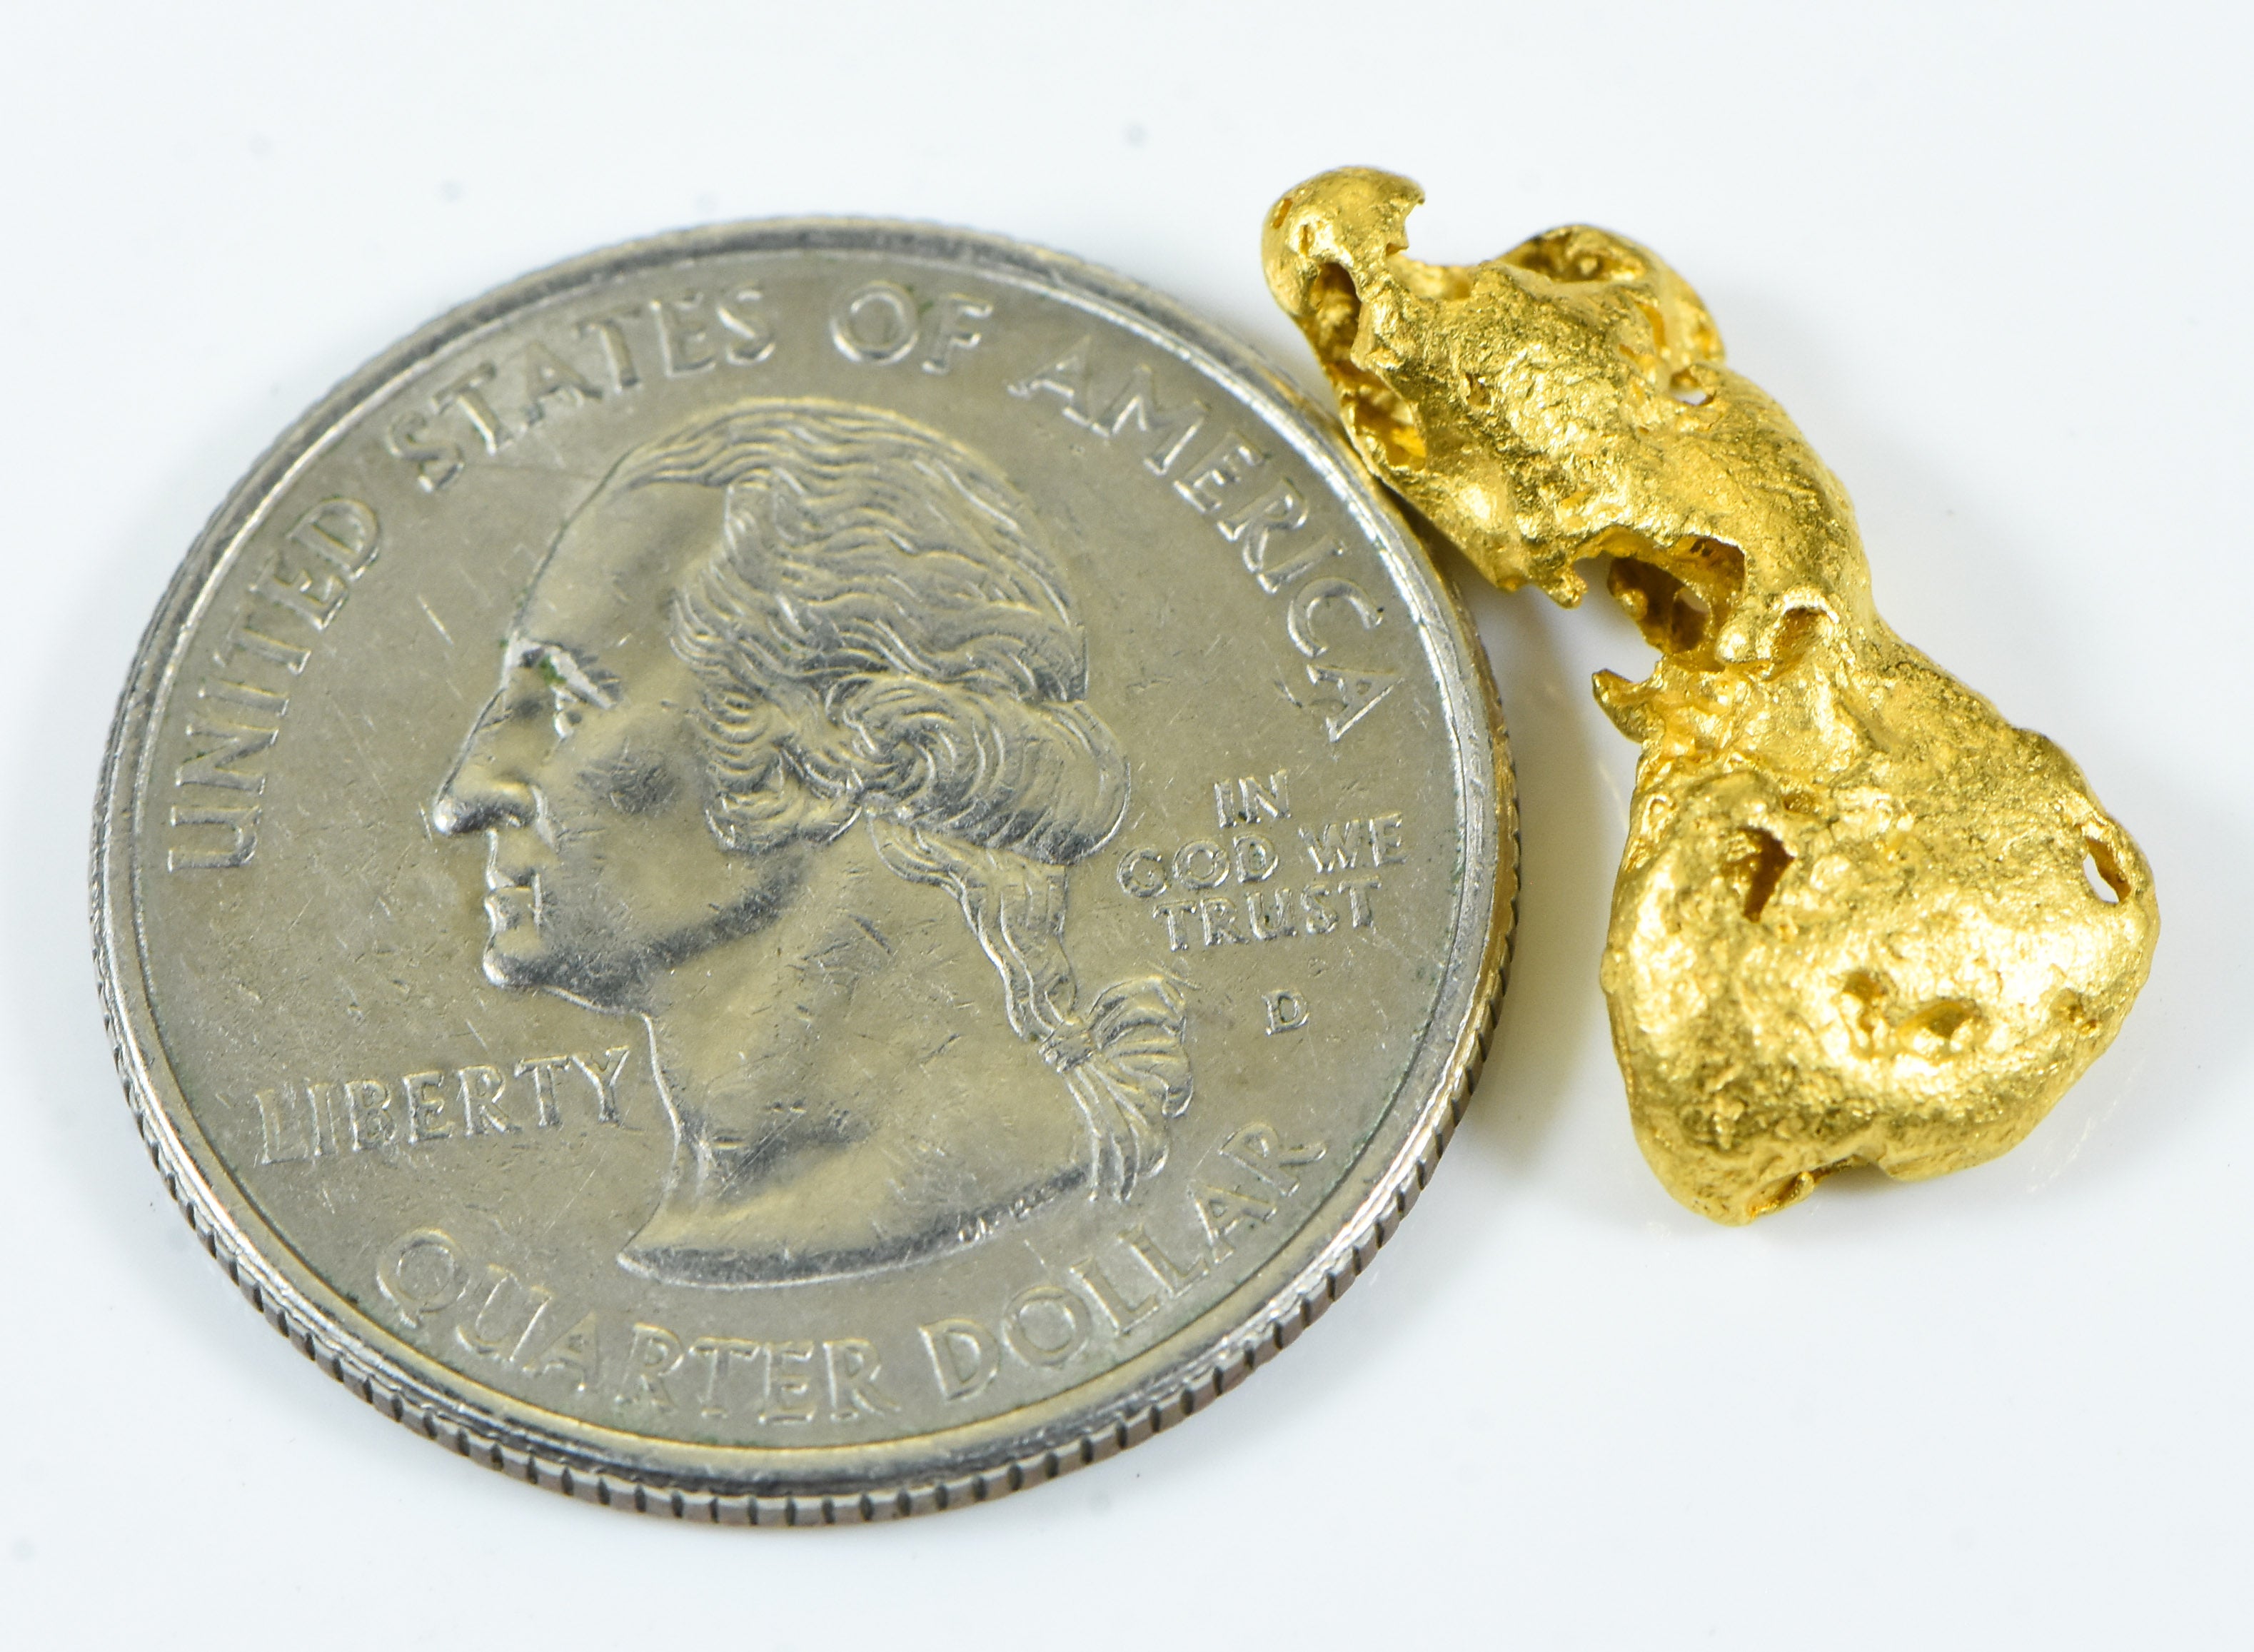 #995 Natural Gold Nugget Australian 4.22 Grams Genuine